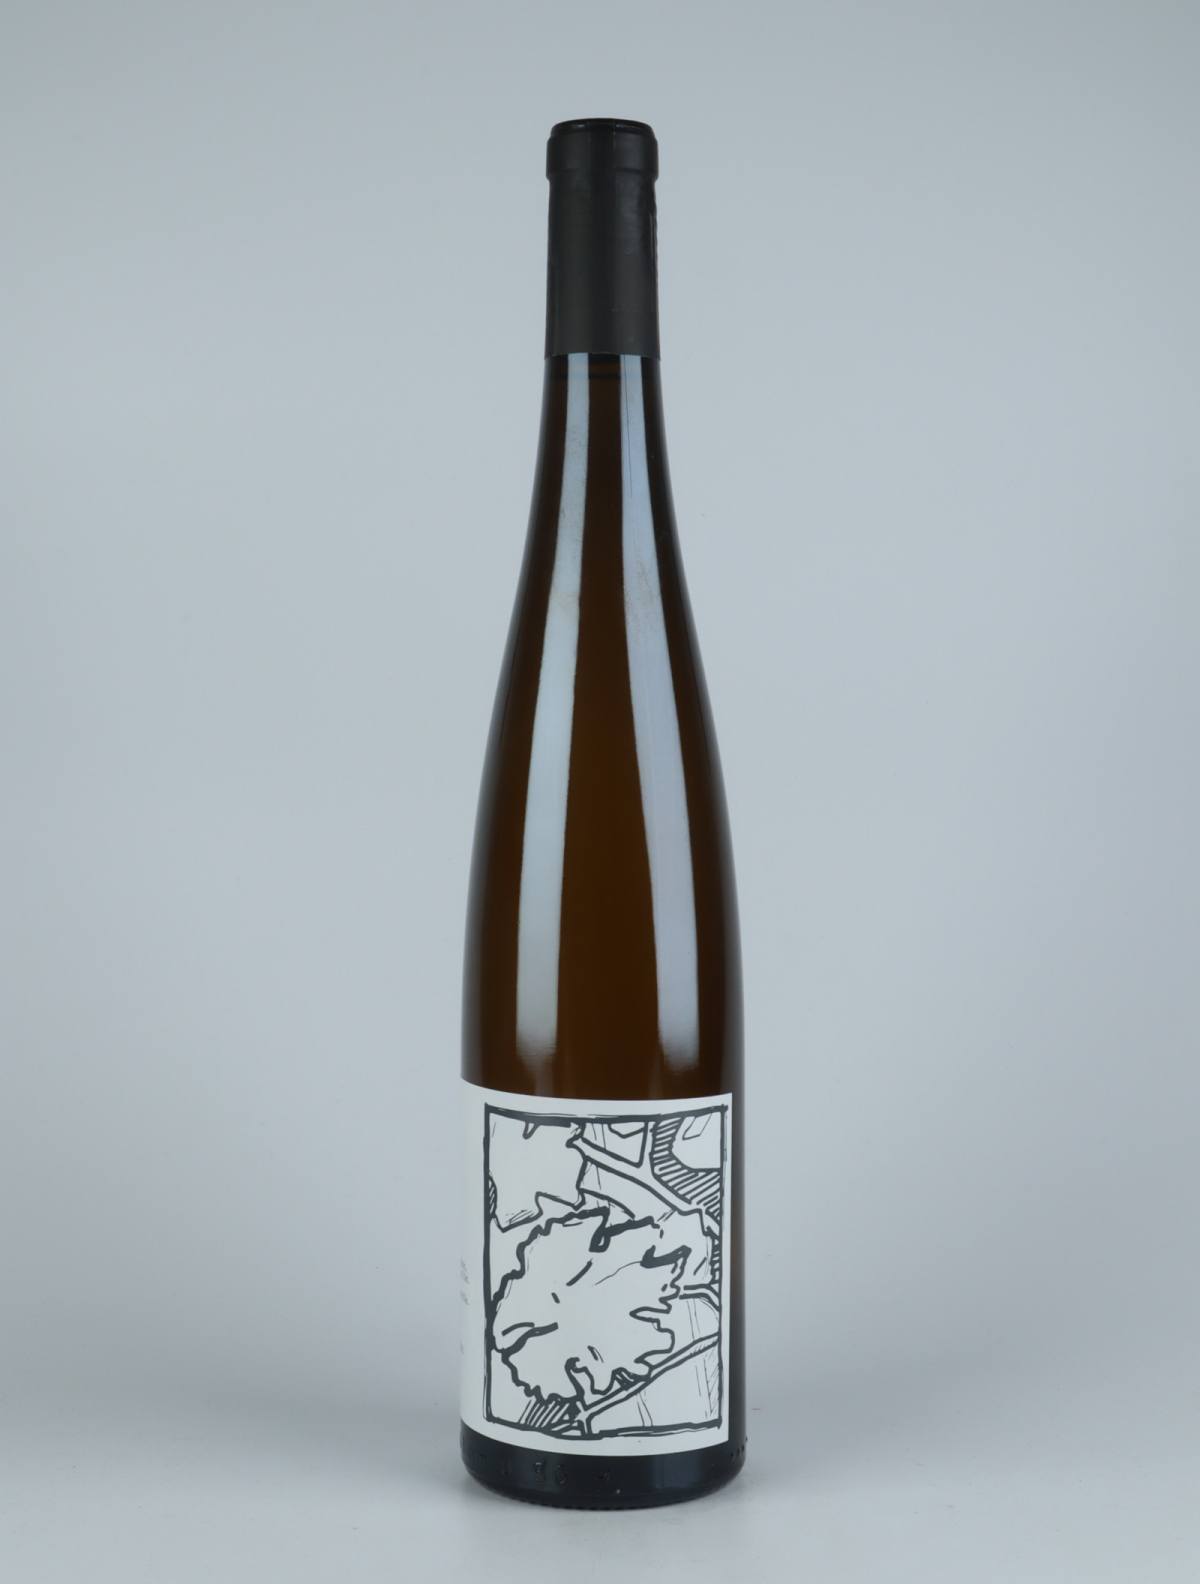 A bottle 2019 Sylvaner White wine from Domaine Goepp, Alsace in France